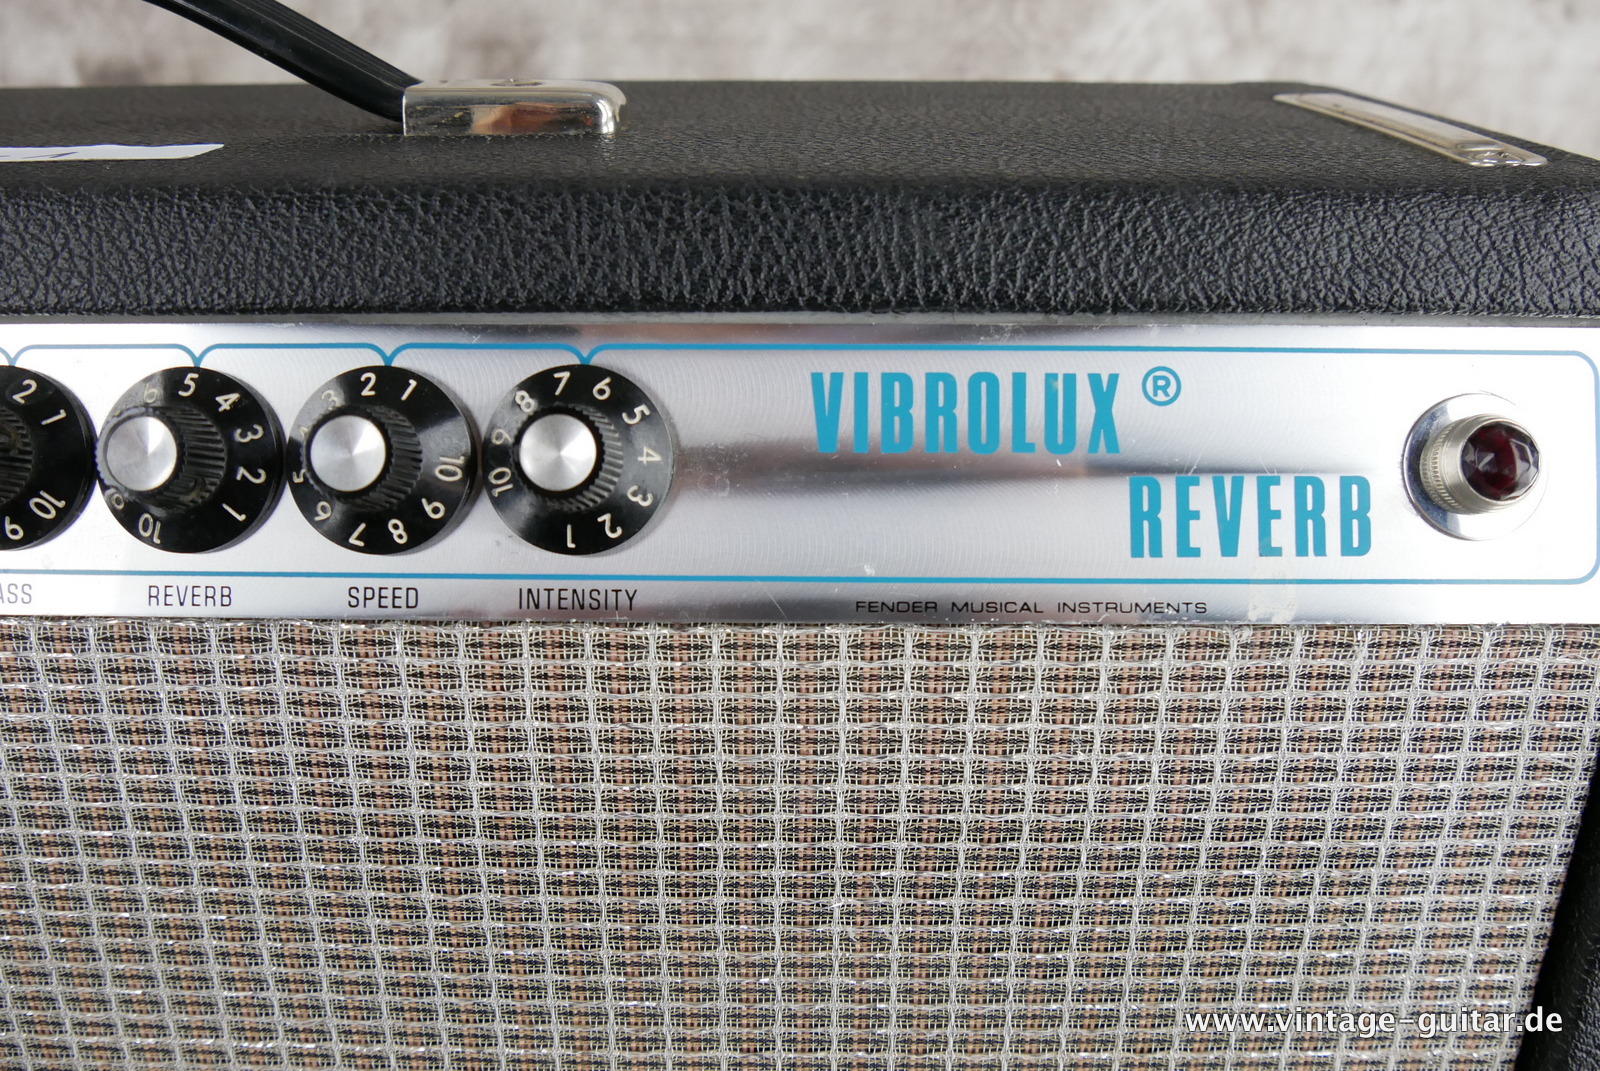 Fender_Vibrolux_Reverb_silverface_1974-007.JPG